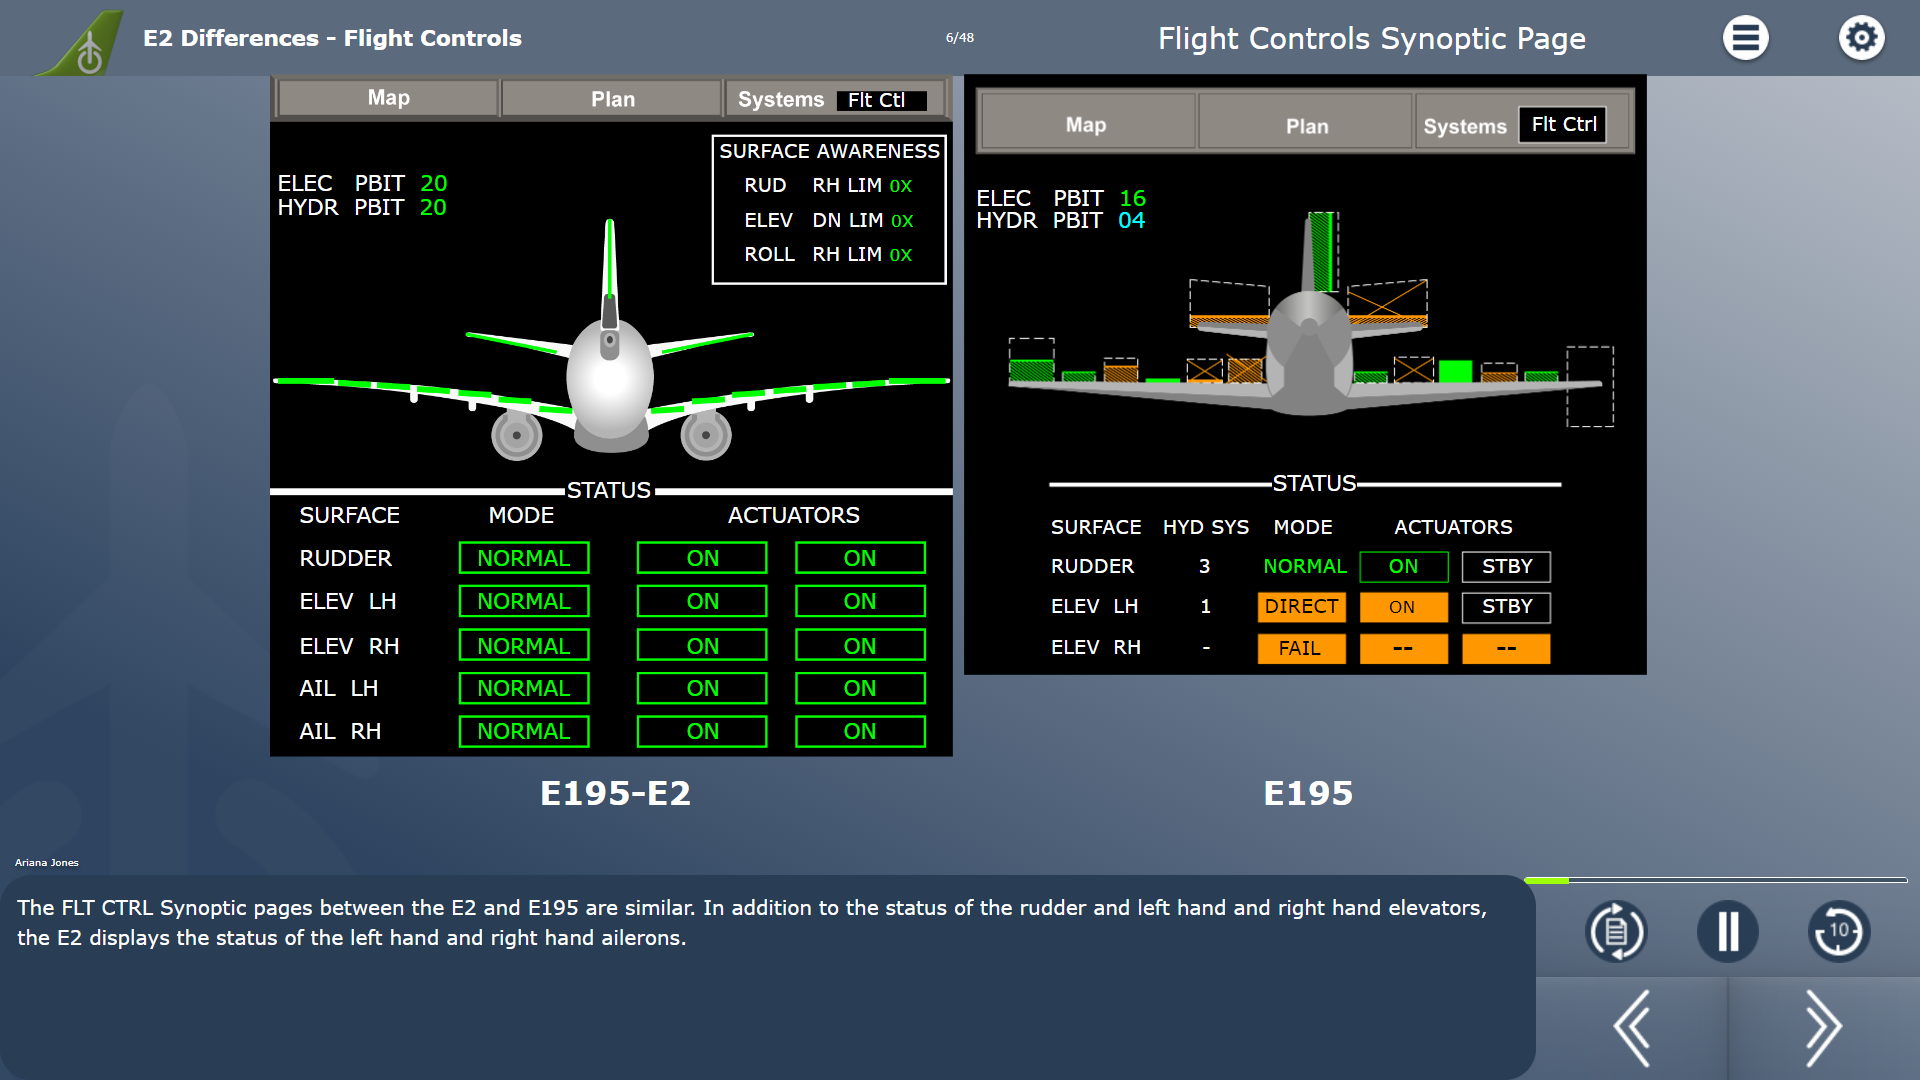 E2 Differences - Flight Control Synoptics